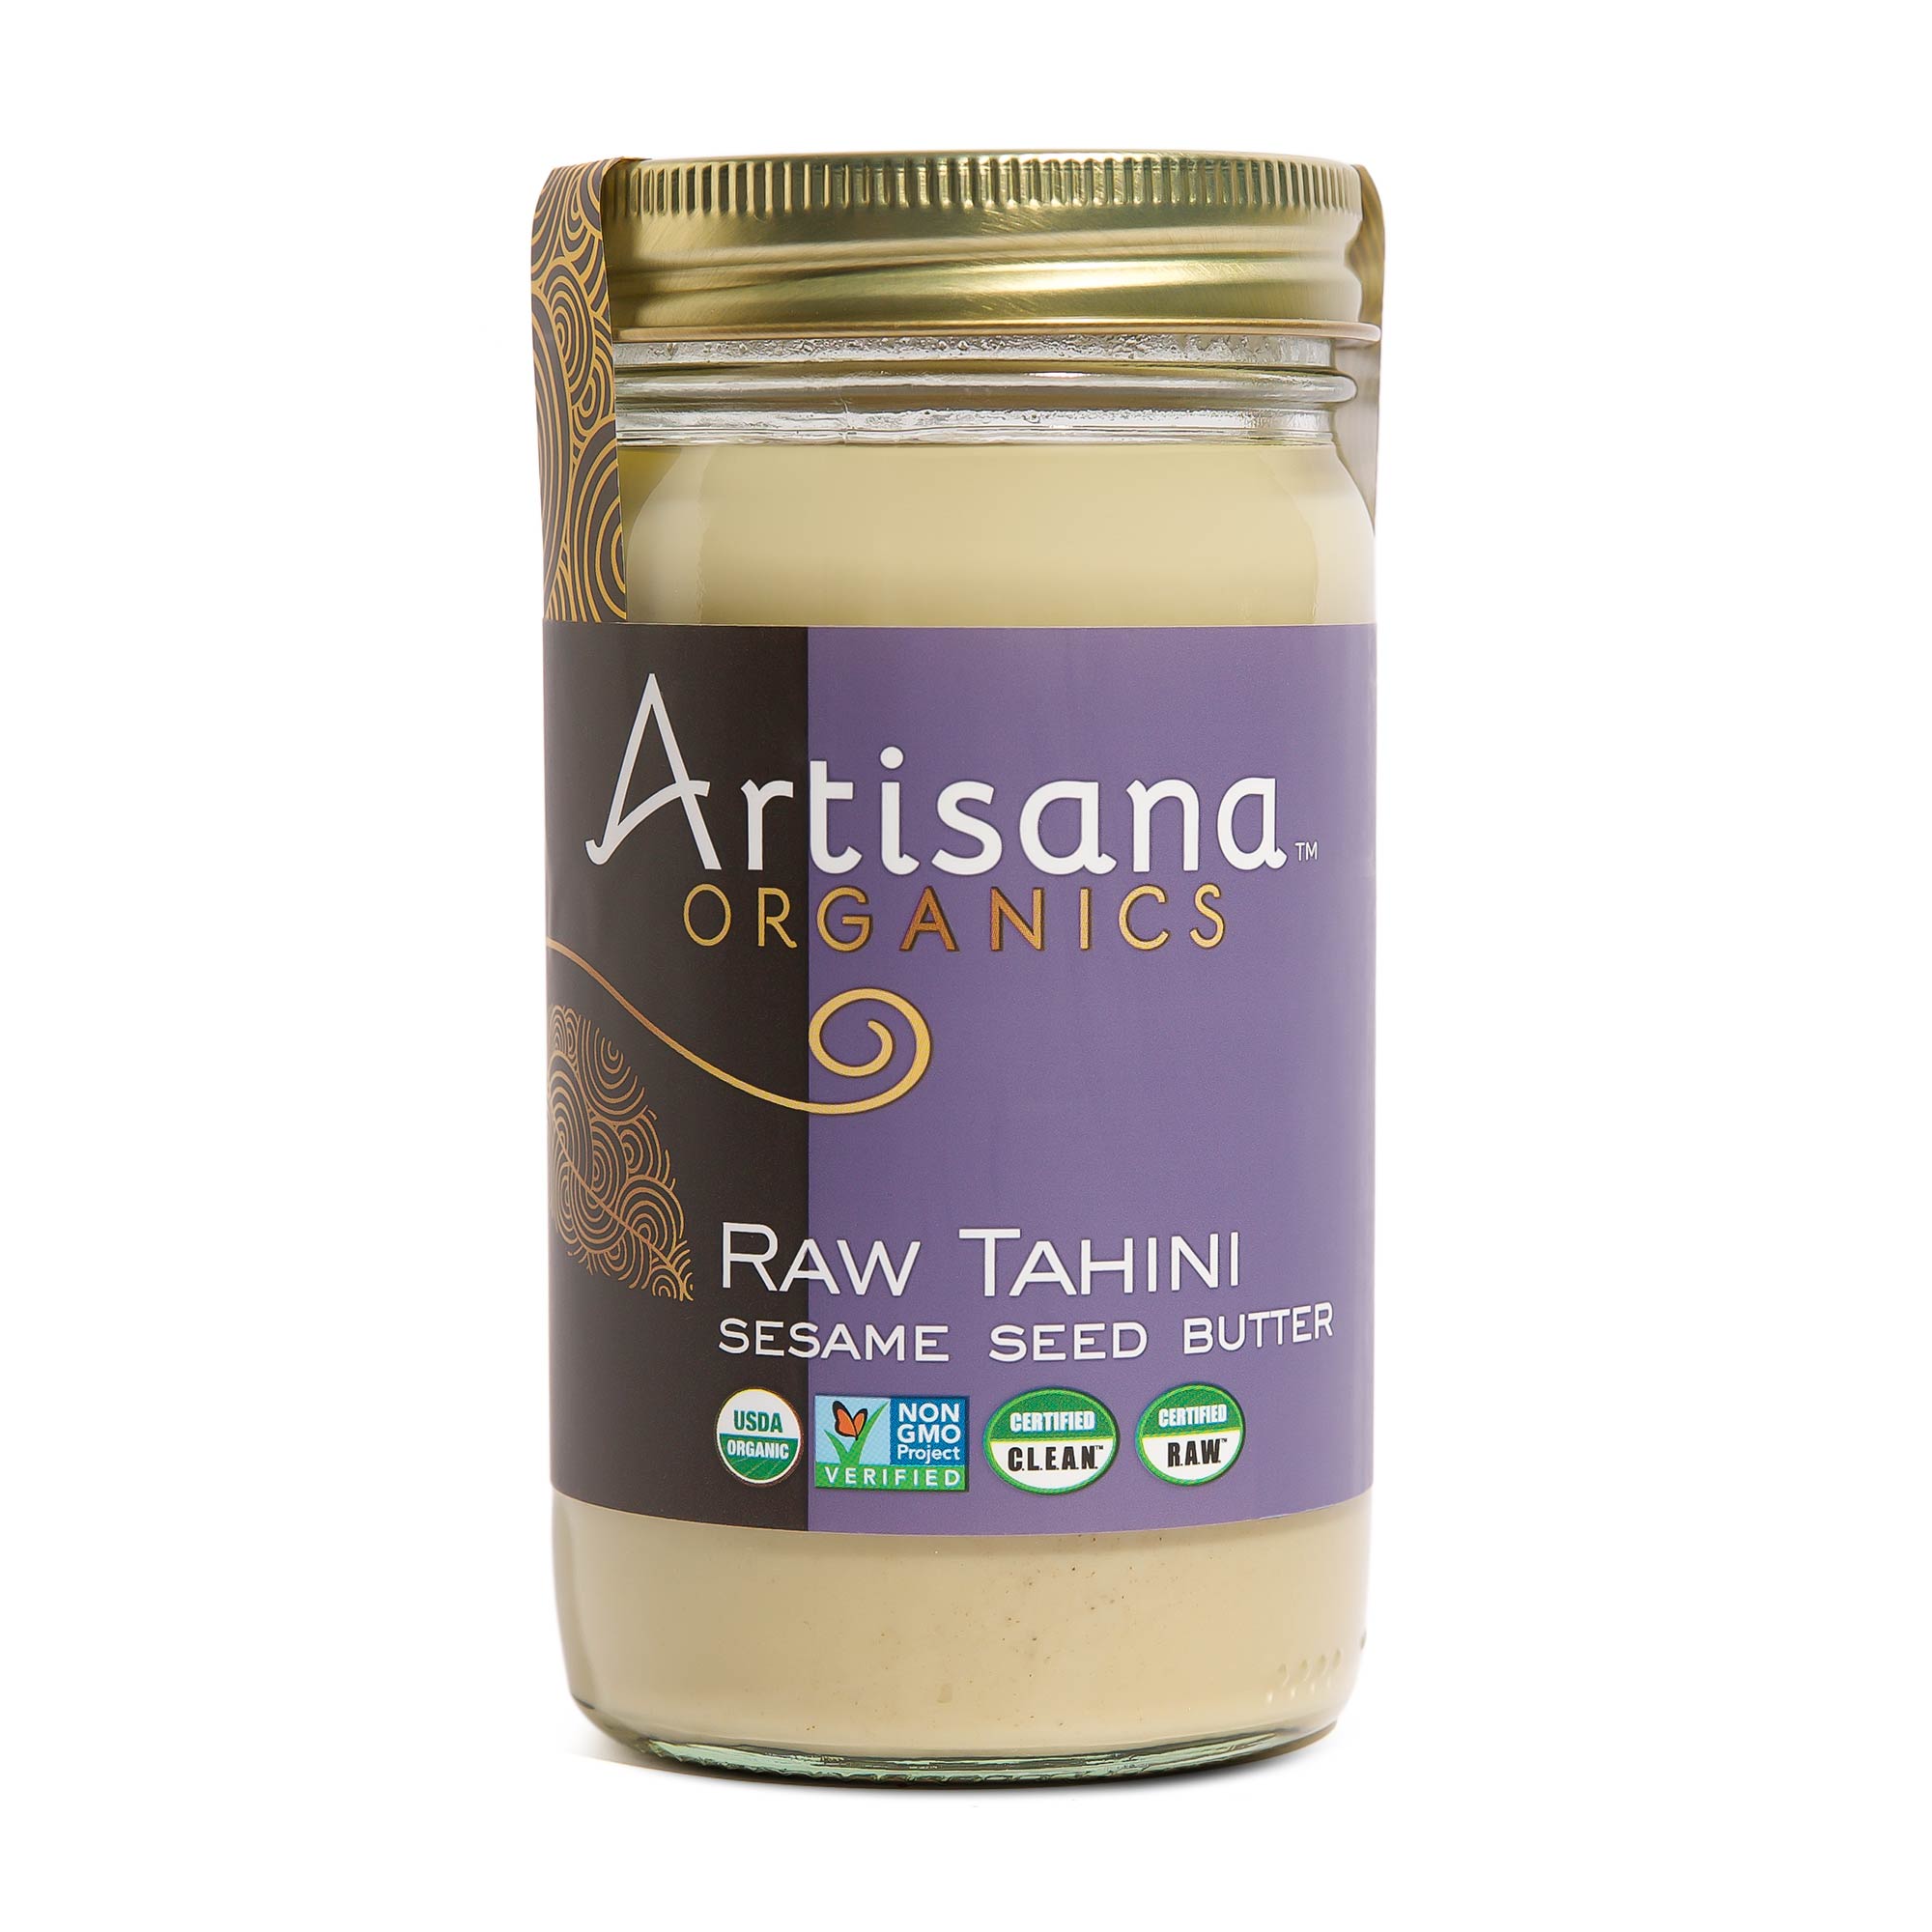 Artisana Raw Tahini Sesame Seed Butter 14oz jar